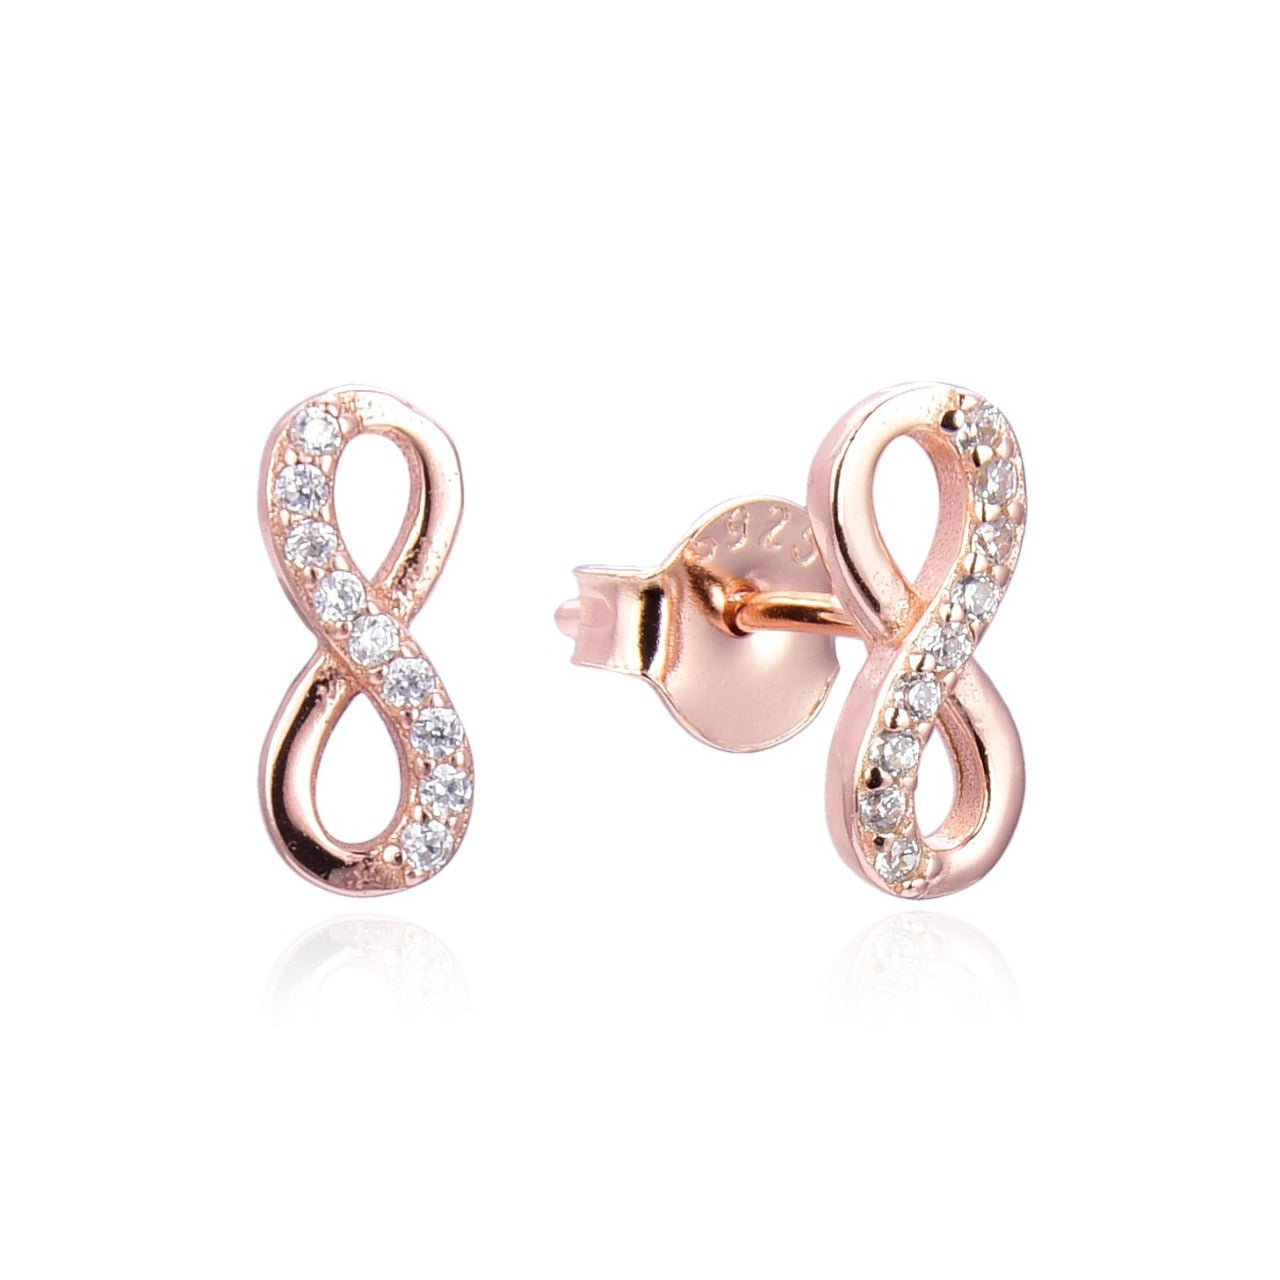 Rose Gold Infinity Stud Earrings by Kilkenny Silver  Rose gold plated sterling silver infinity love stud earrings with cubic zirconia stones.